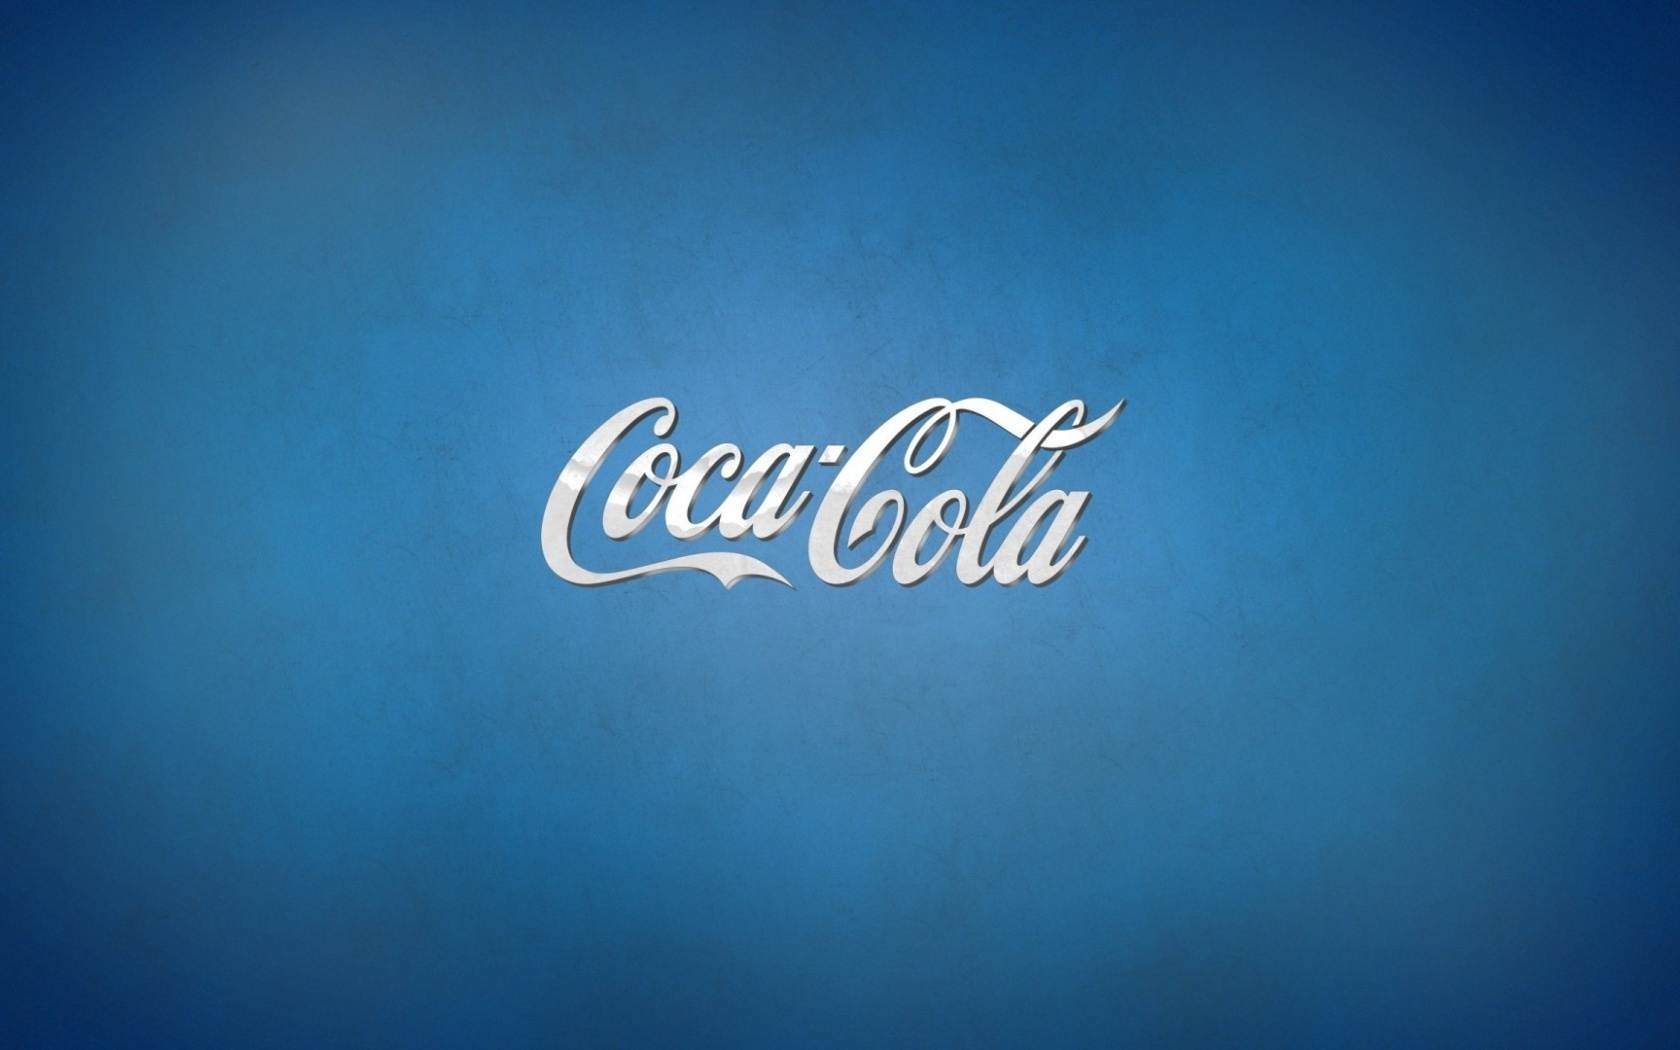 Wallpapers Backgrounds   Coca Cola Blue definition desktop background